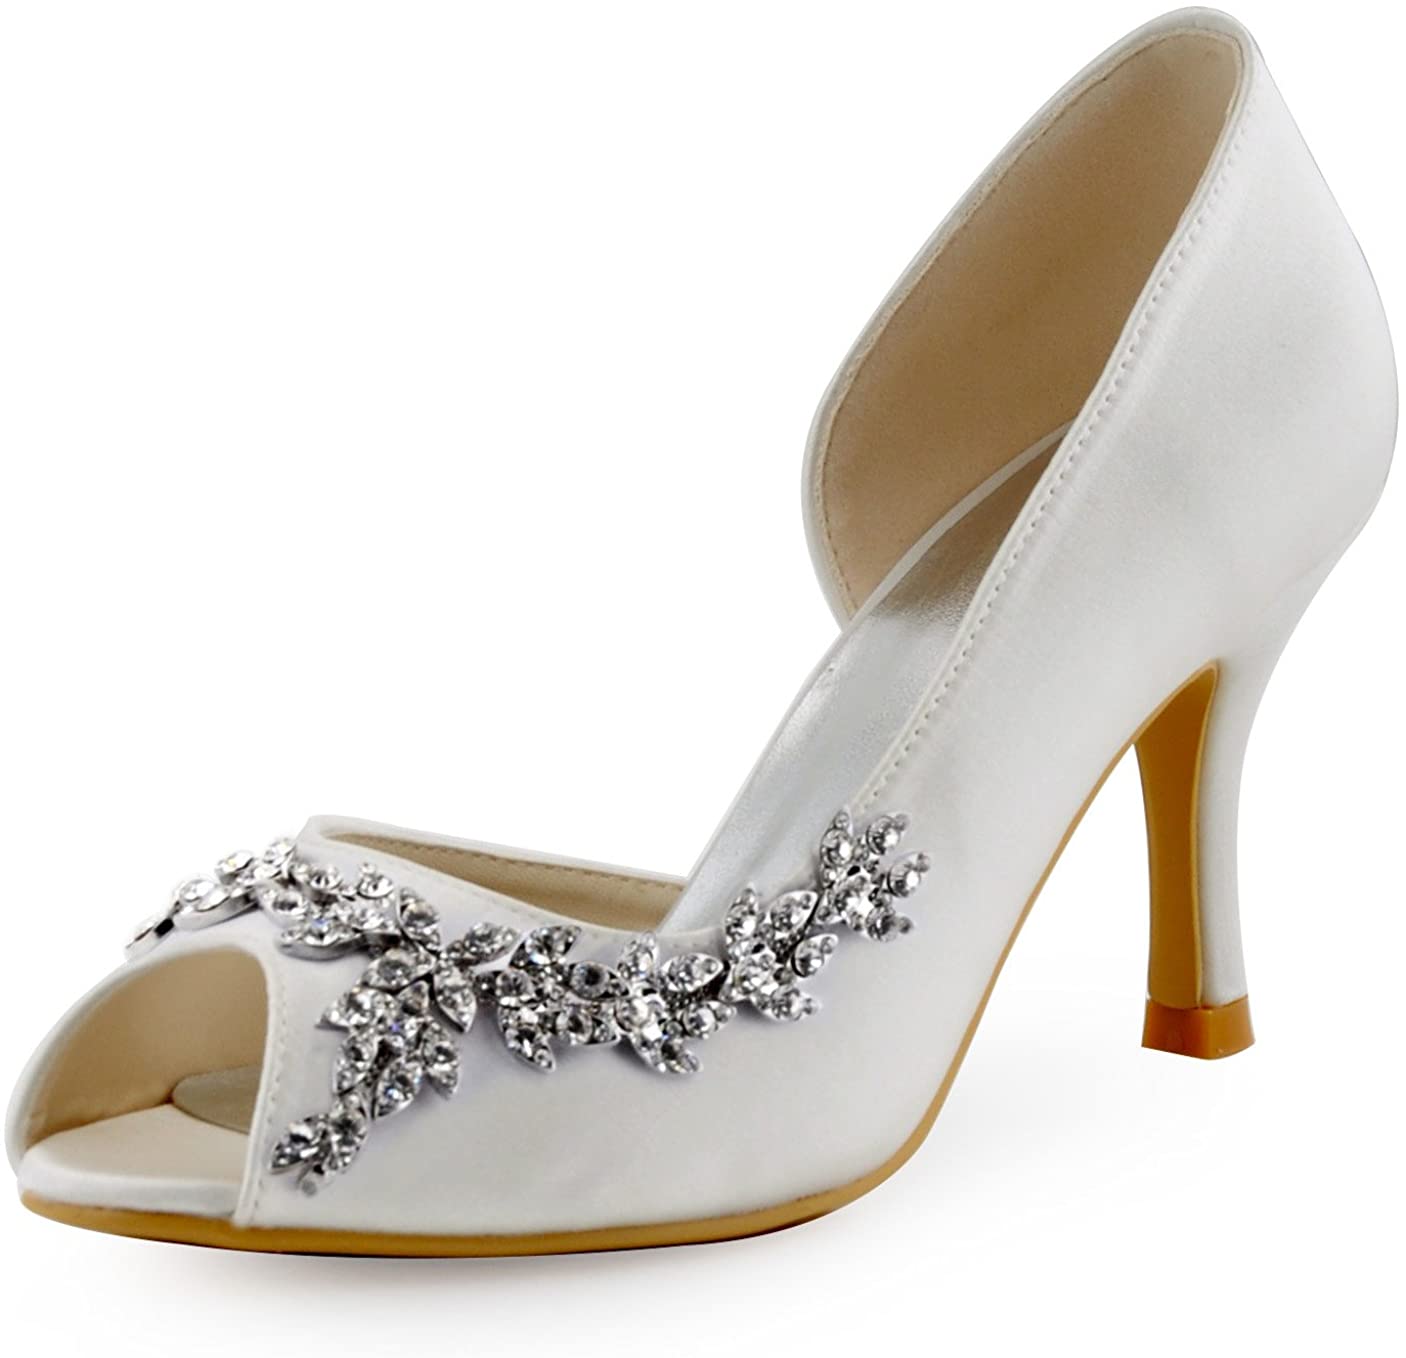 Elegantpark Fashion Clips AH Mujer Accesorios Rotonda Rhinstones zapato Clips 2 Pcs 